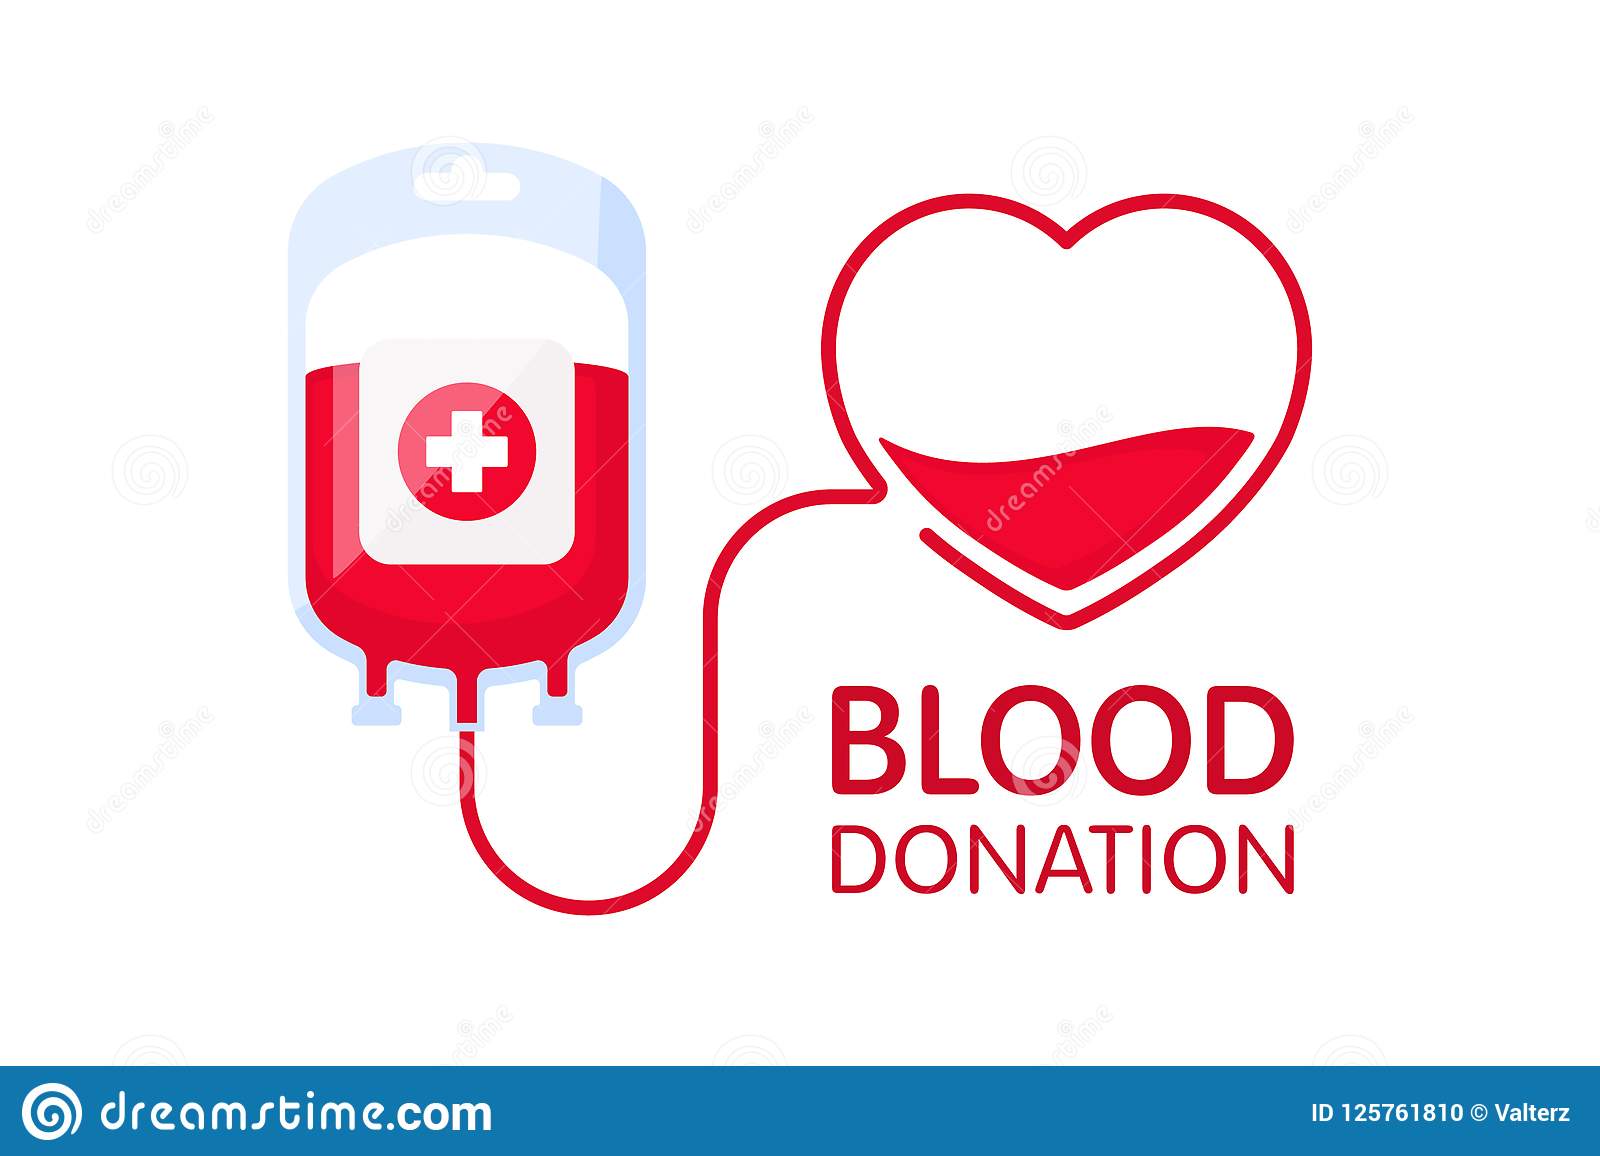 Blood Donation Programme 2021